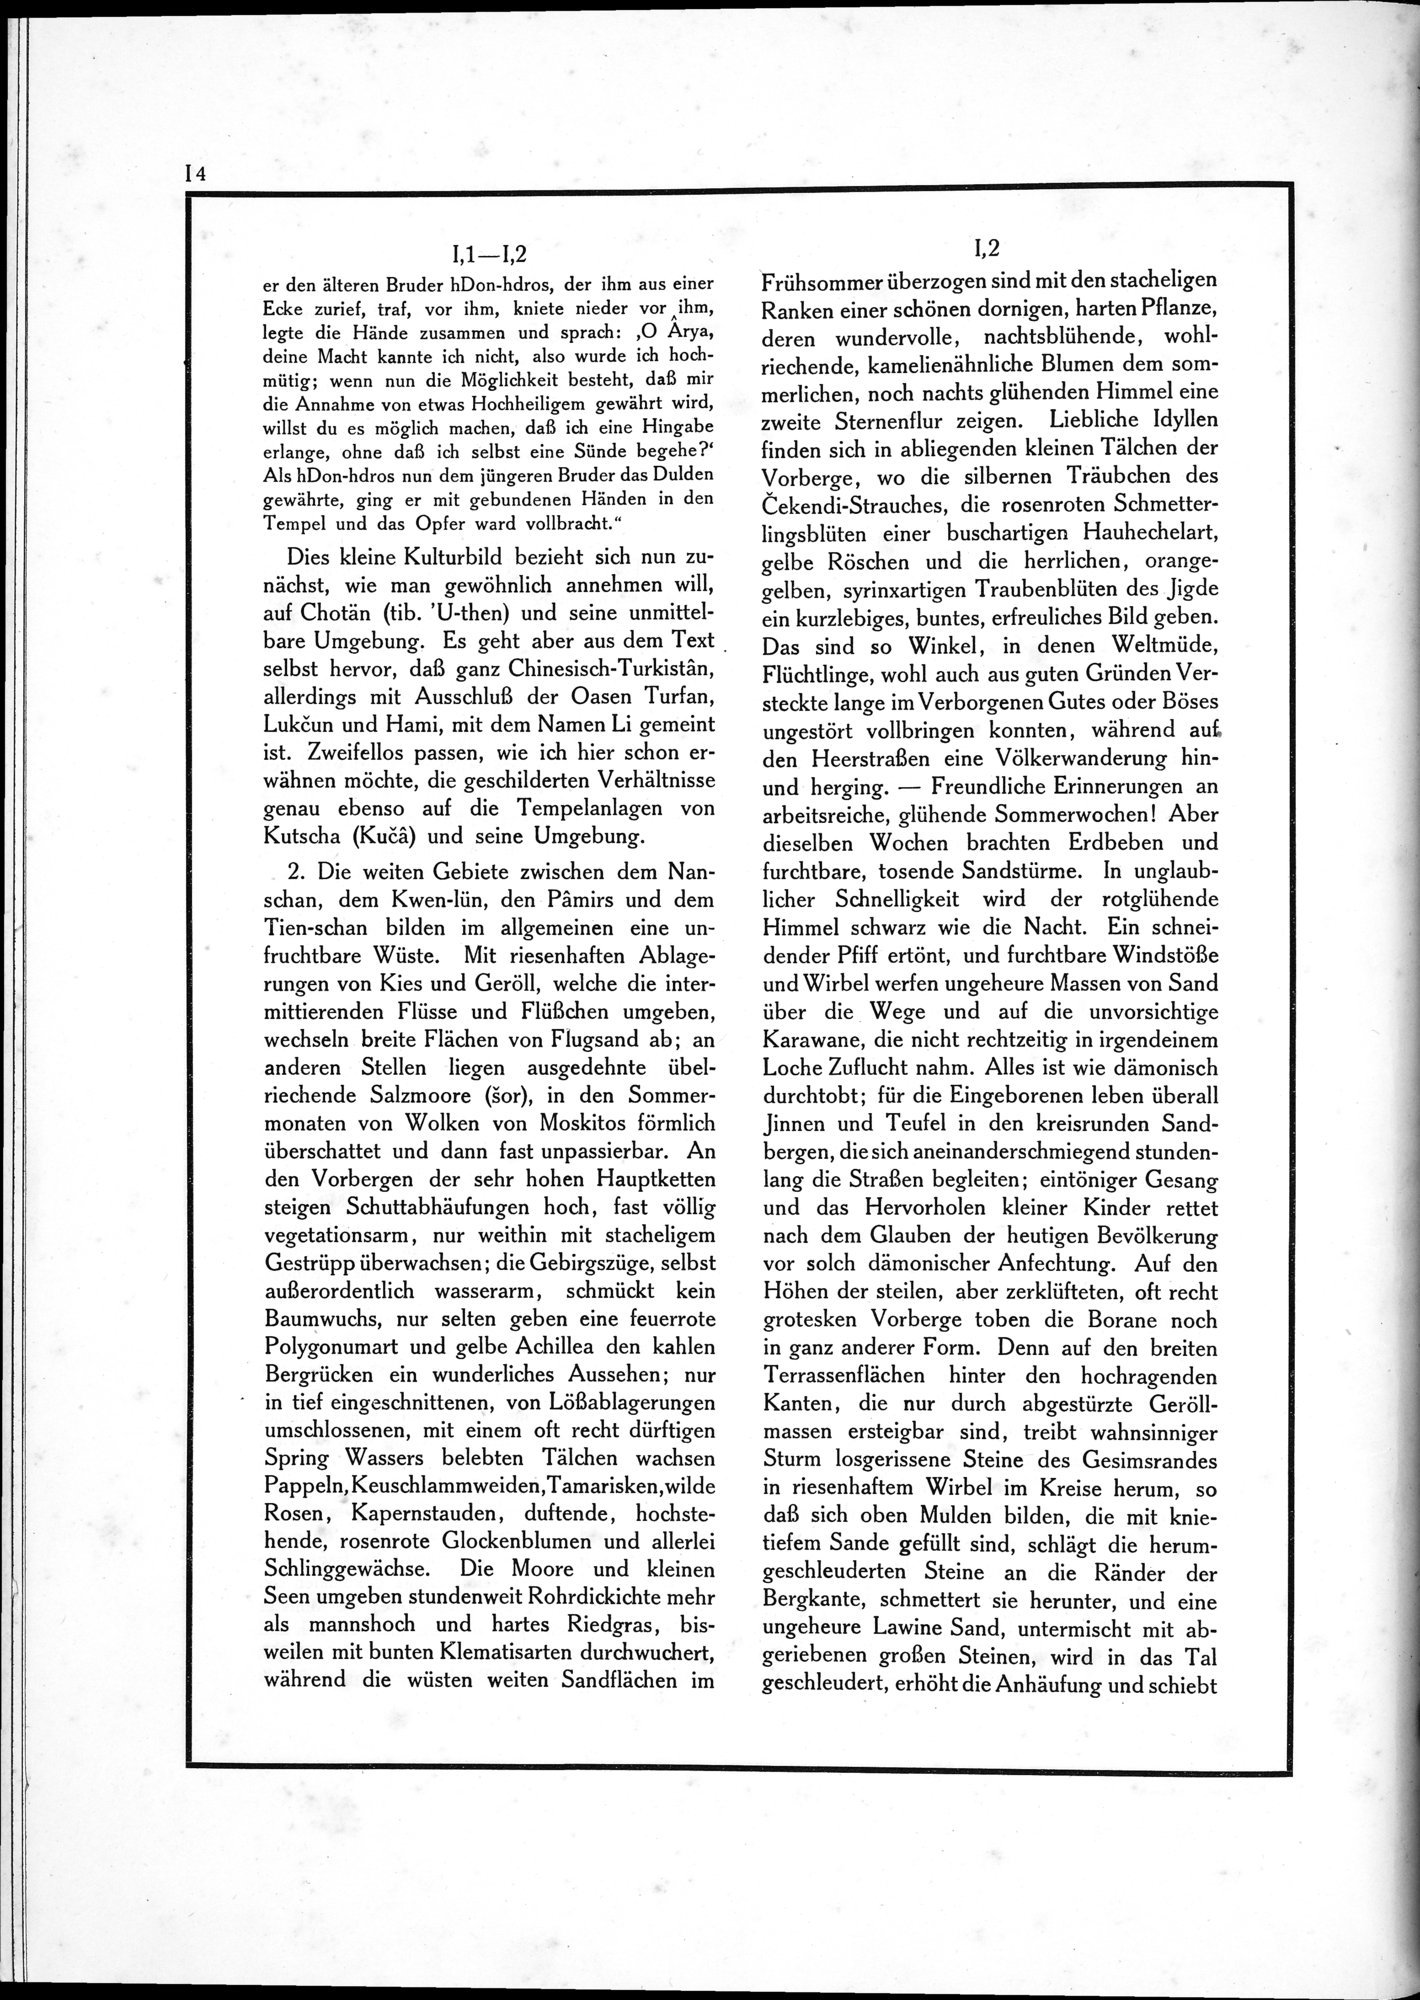 Alt-Kutscha : vol.1 / Page 16 (Grayscale High Resolution Image)